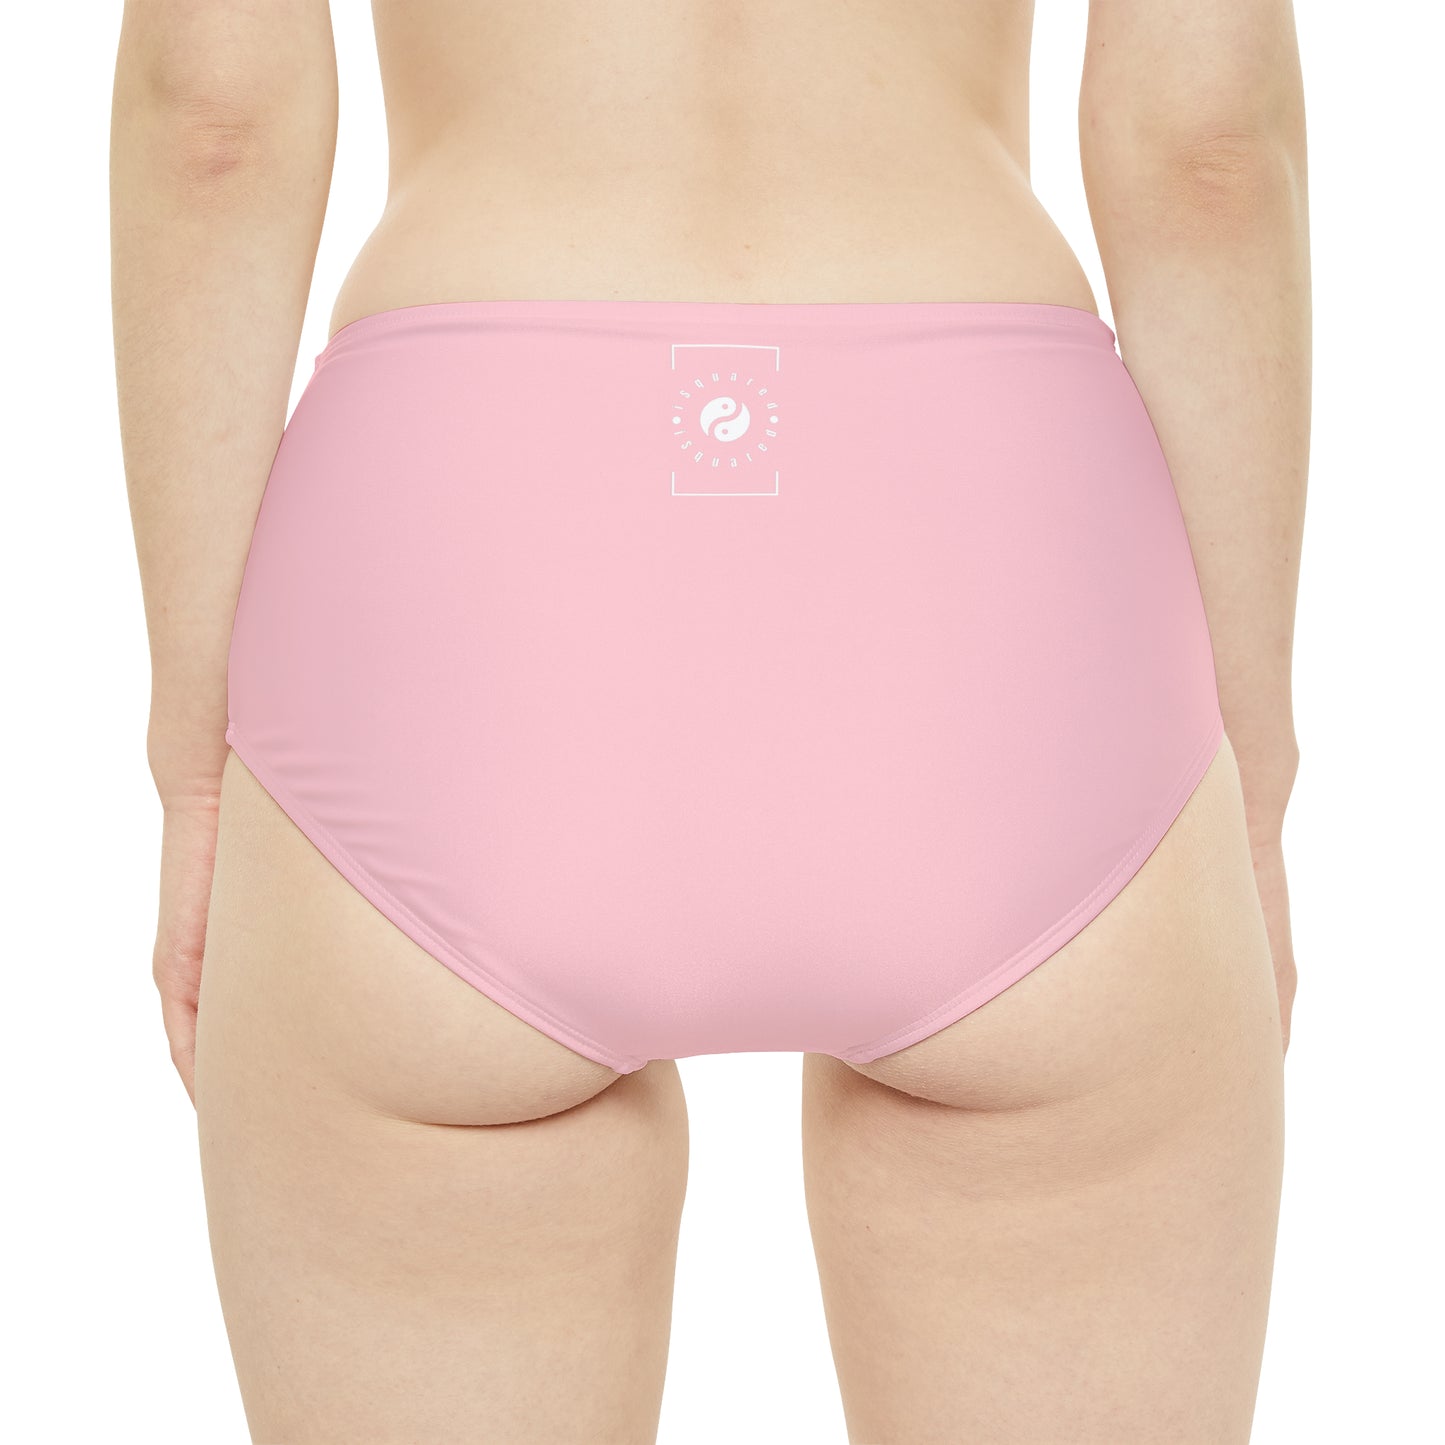 FFCCD4 Light Pink - High Waisted Bikini Bottom